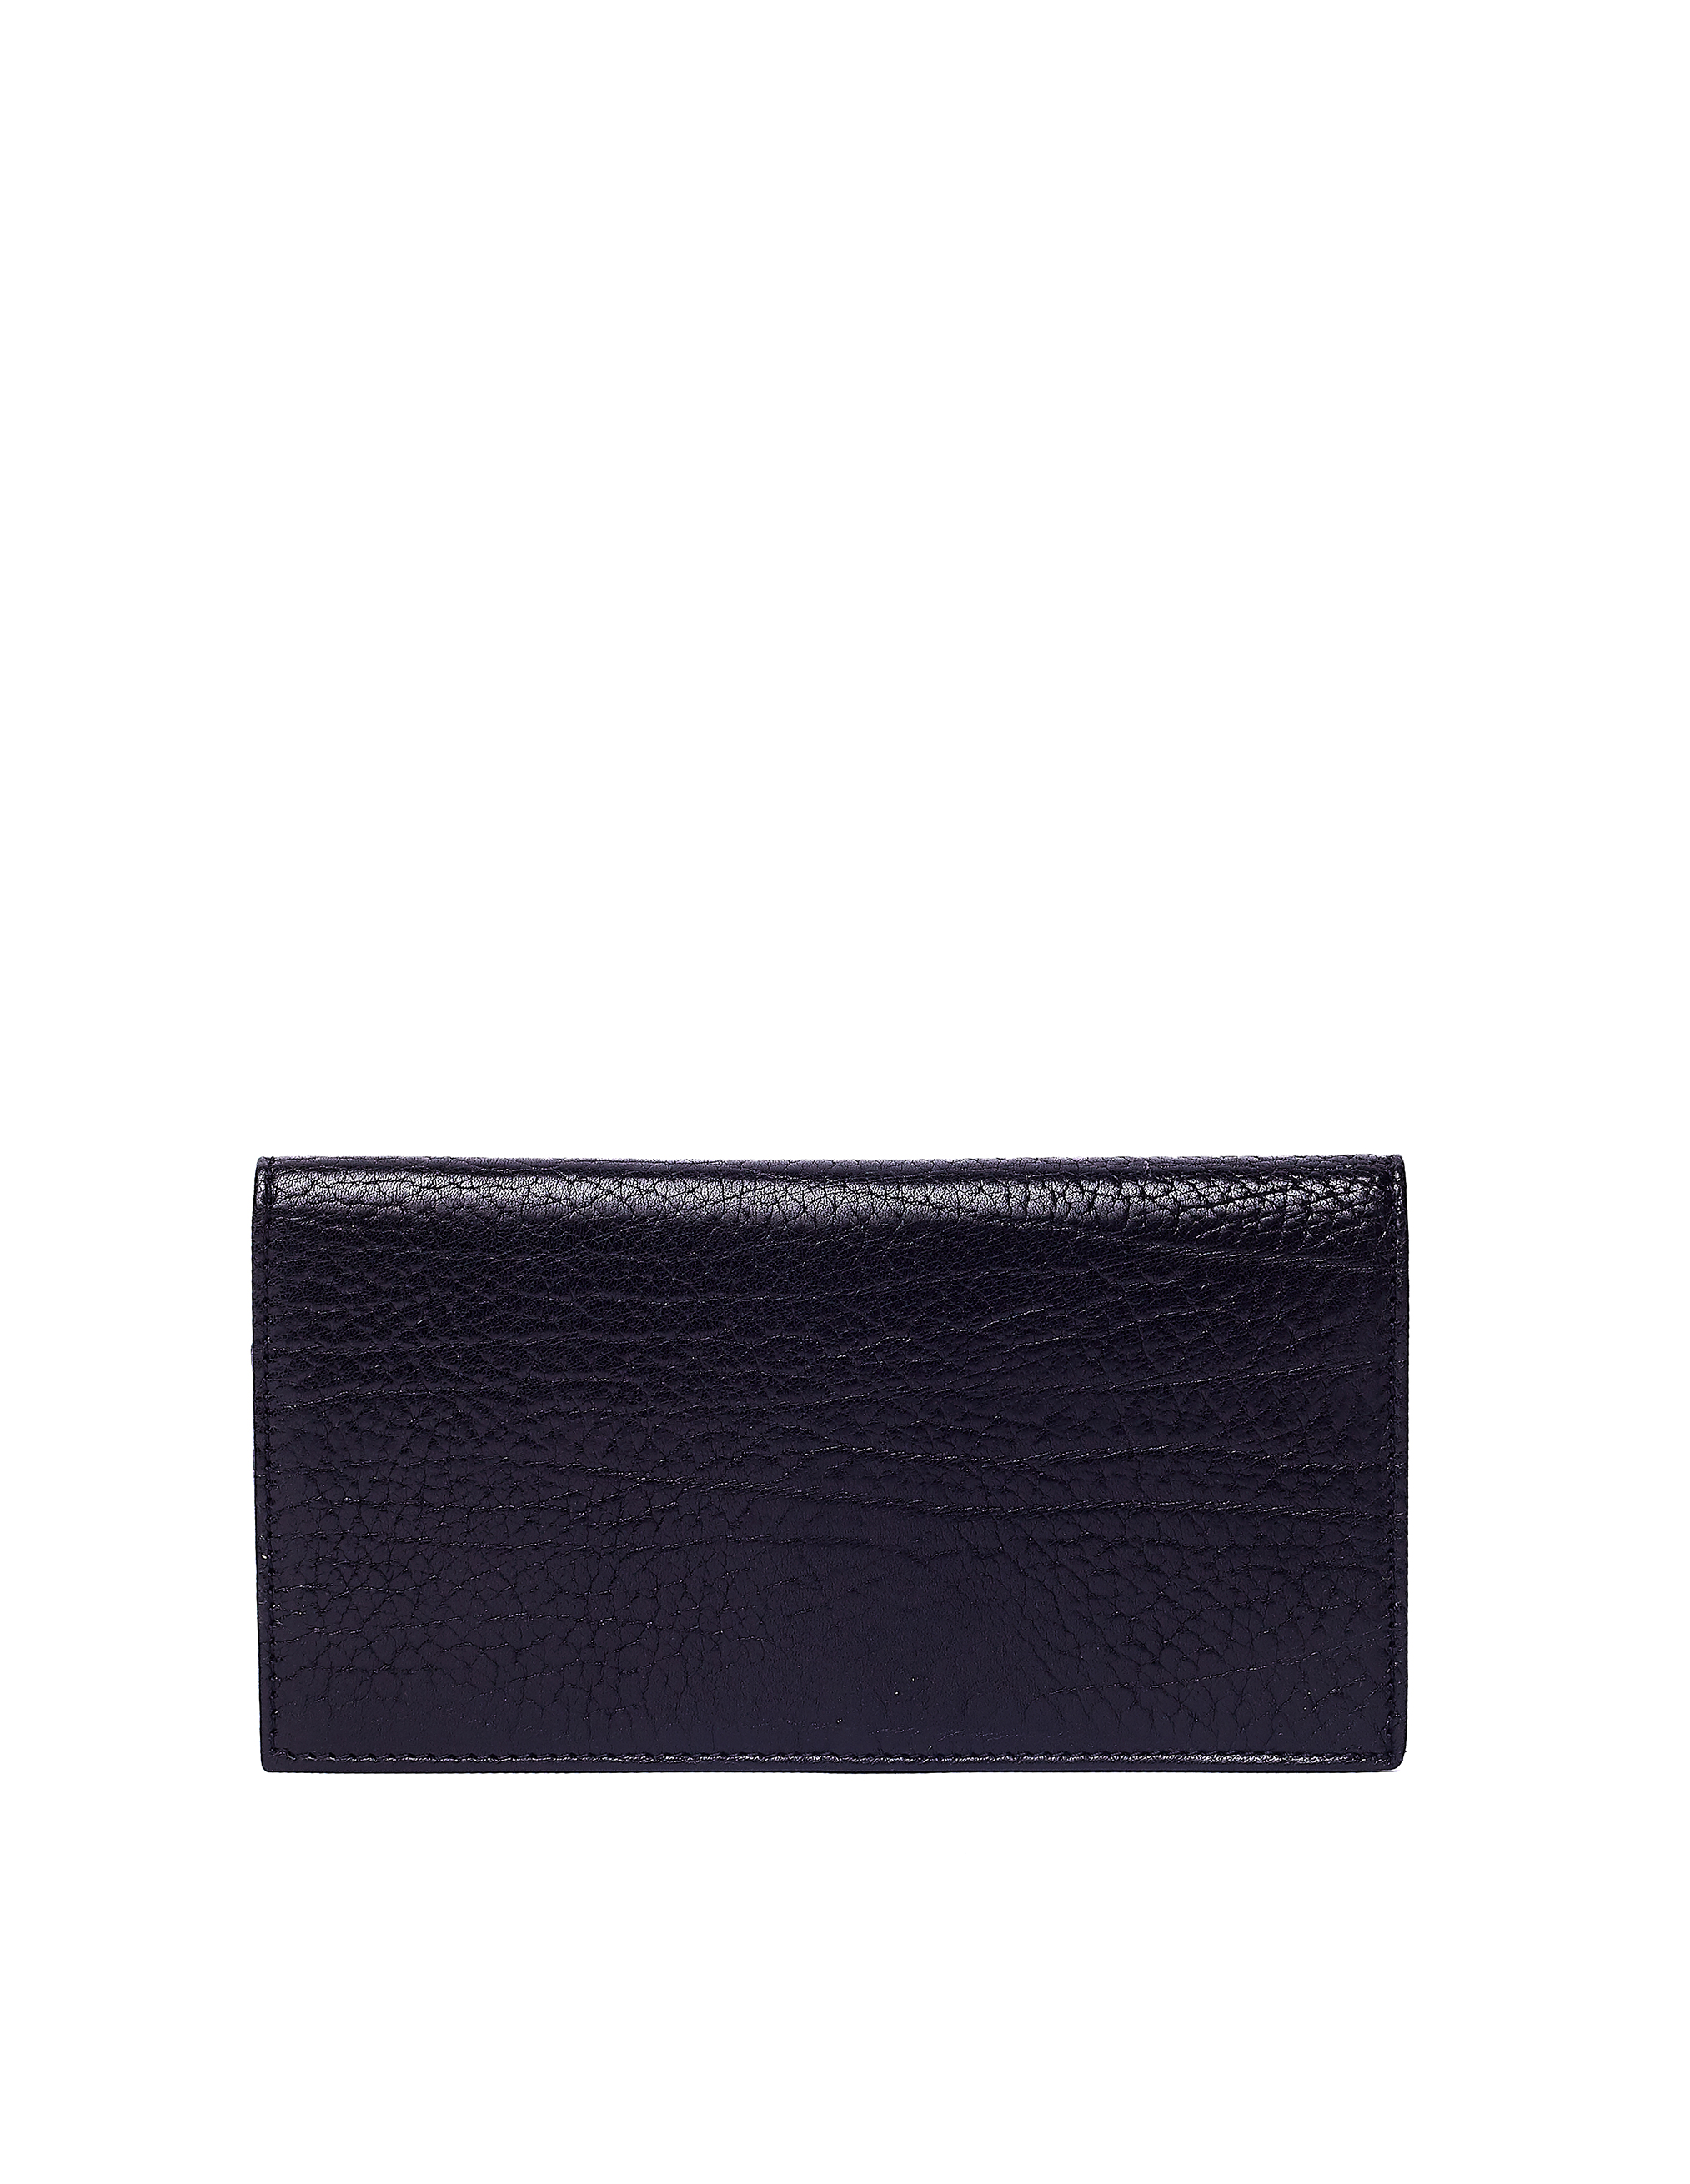 Черный кожаный кошелек Pocket Ugo Cacciatori WL111/VRN, размер One Size WL111/VRN - фото 2